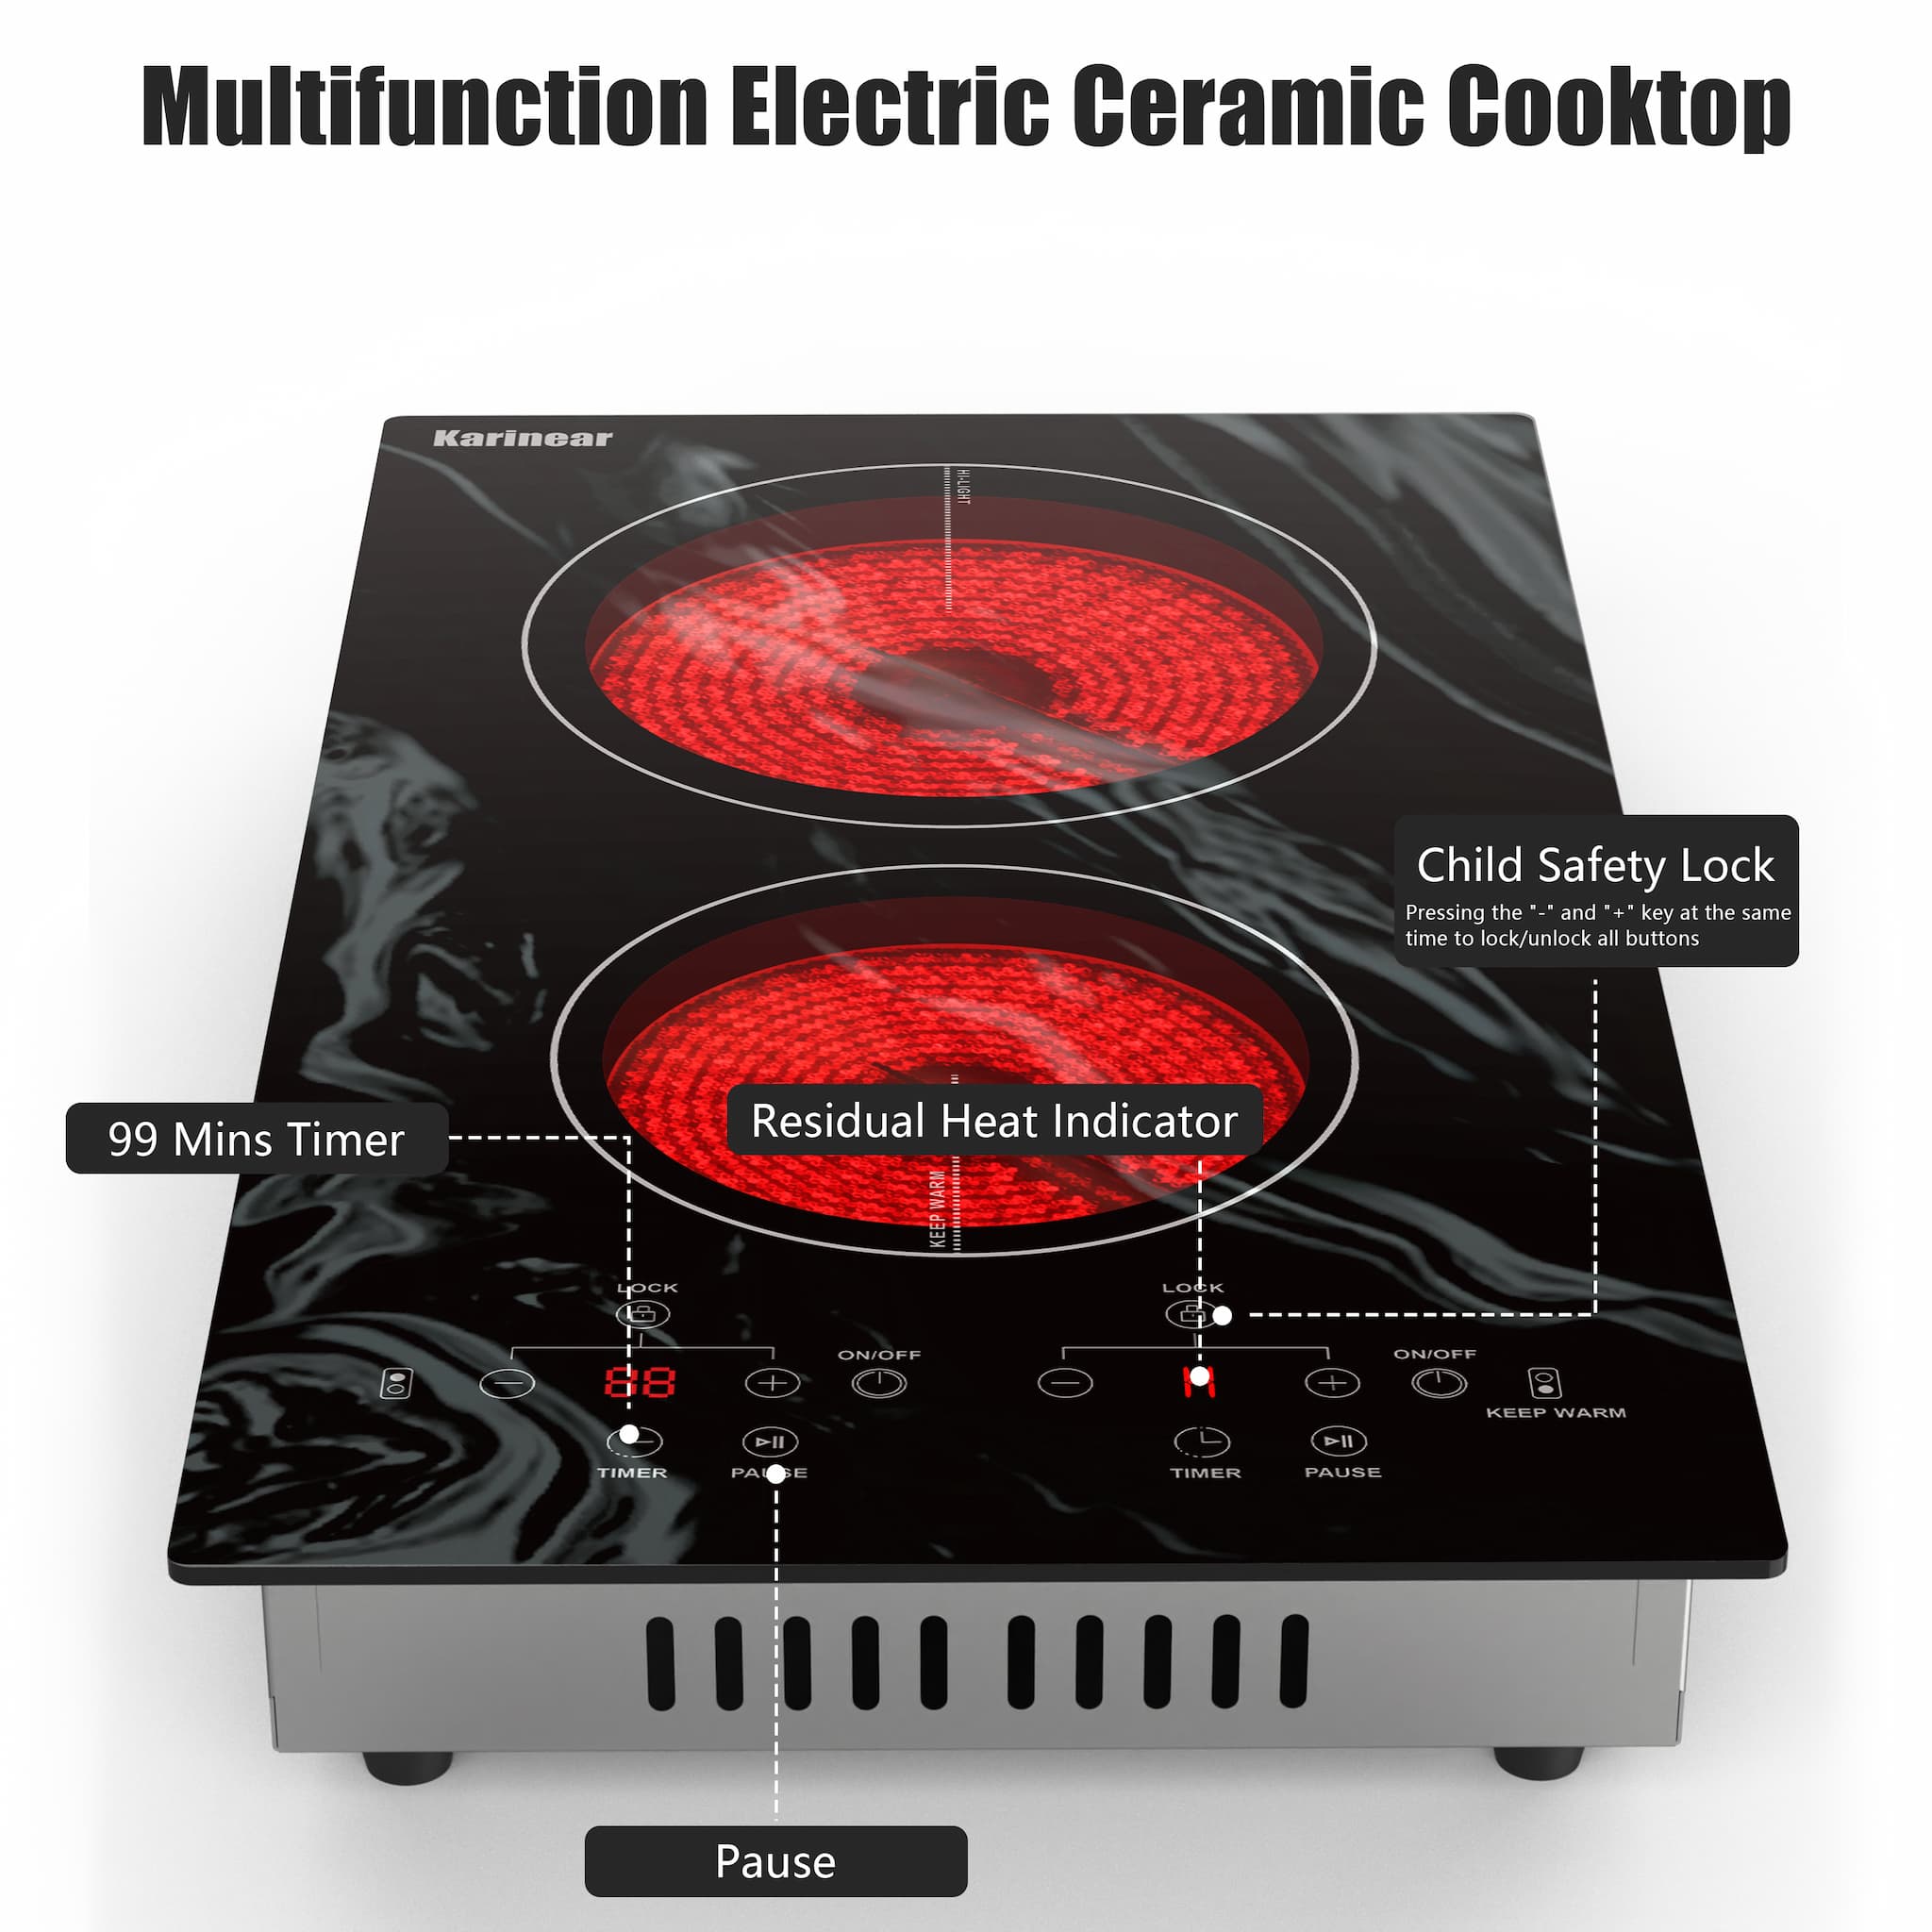 Karinear 2 Burners Electric Cooktop Review  120v Plug in Ceramic 12 Inch  Countertop & Built-in 